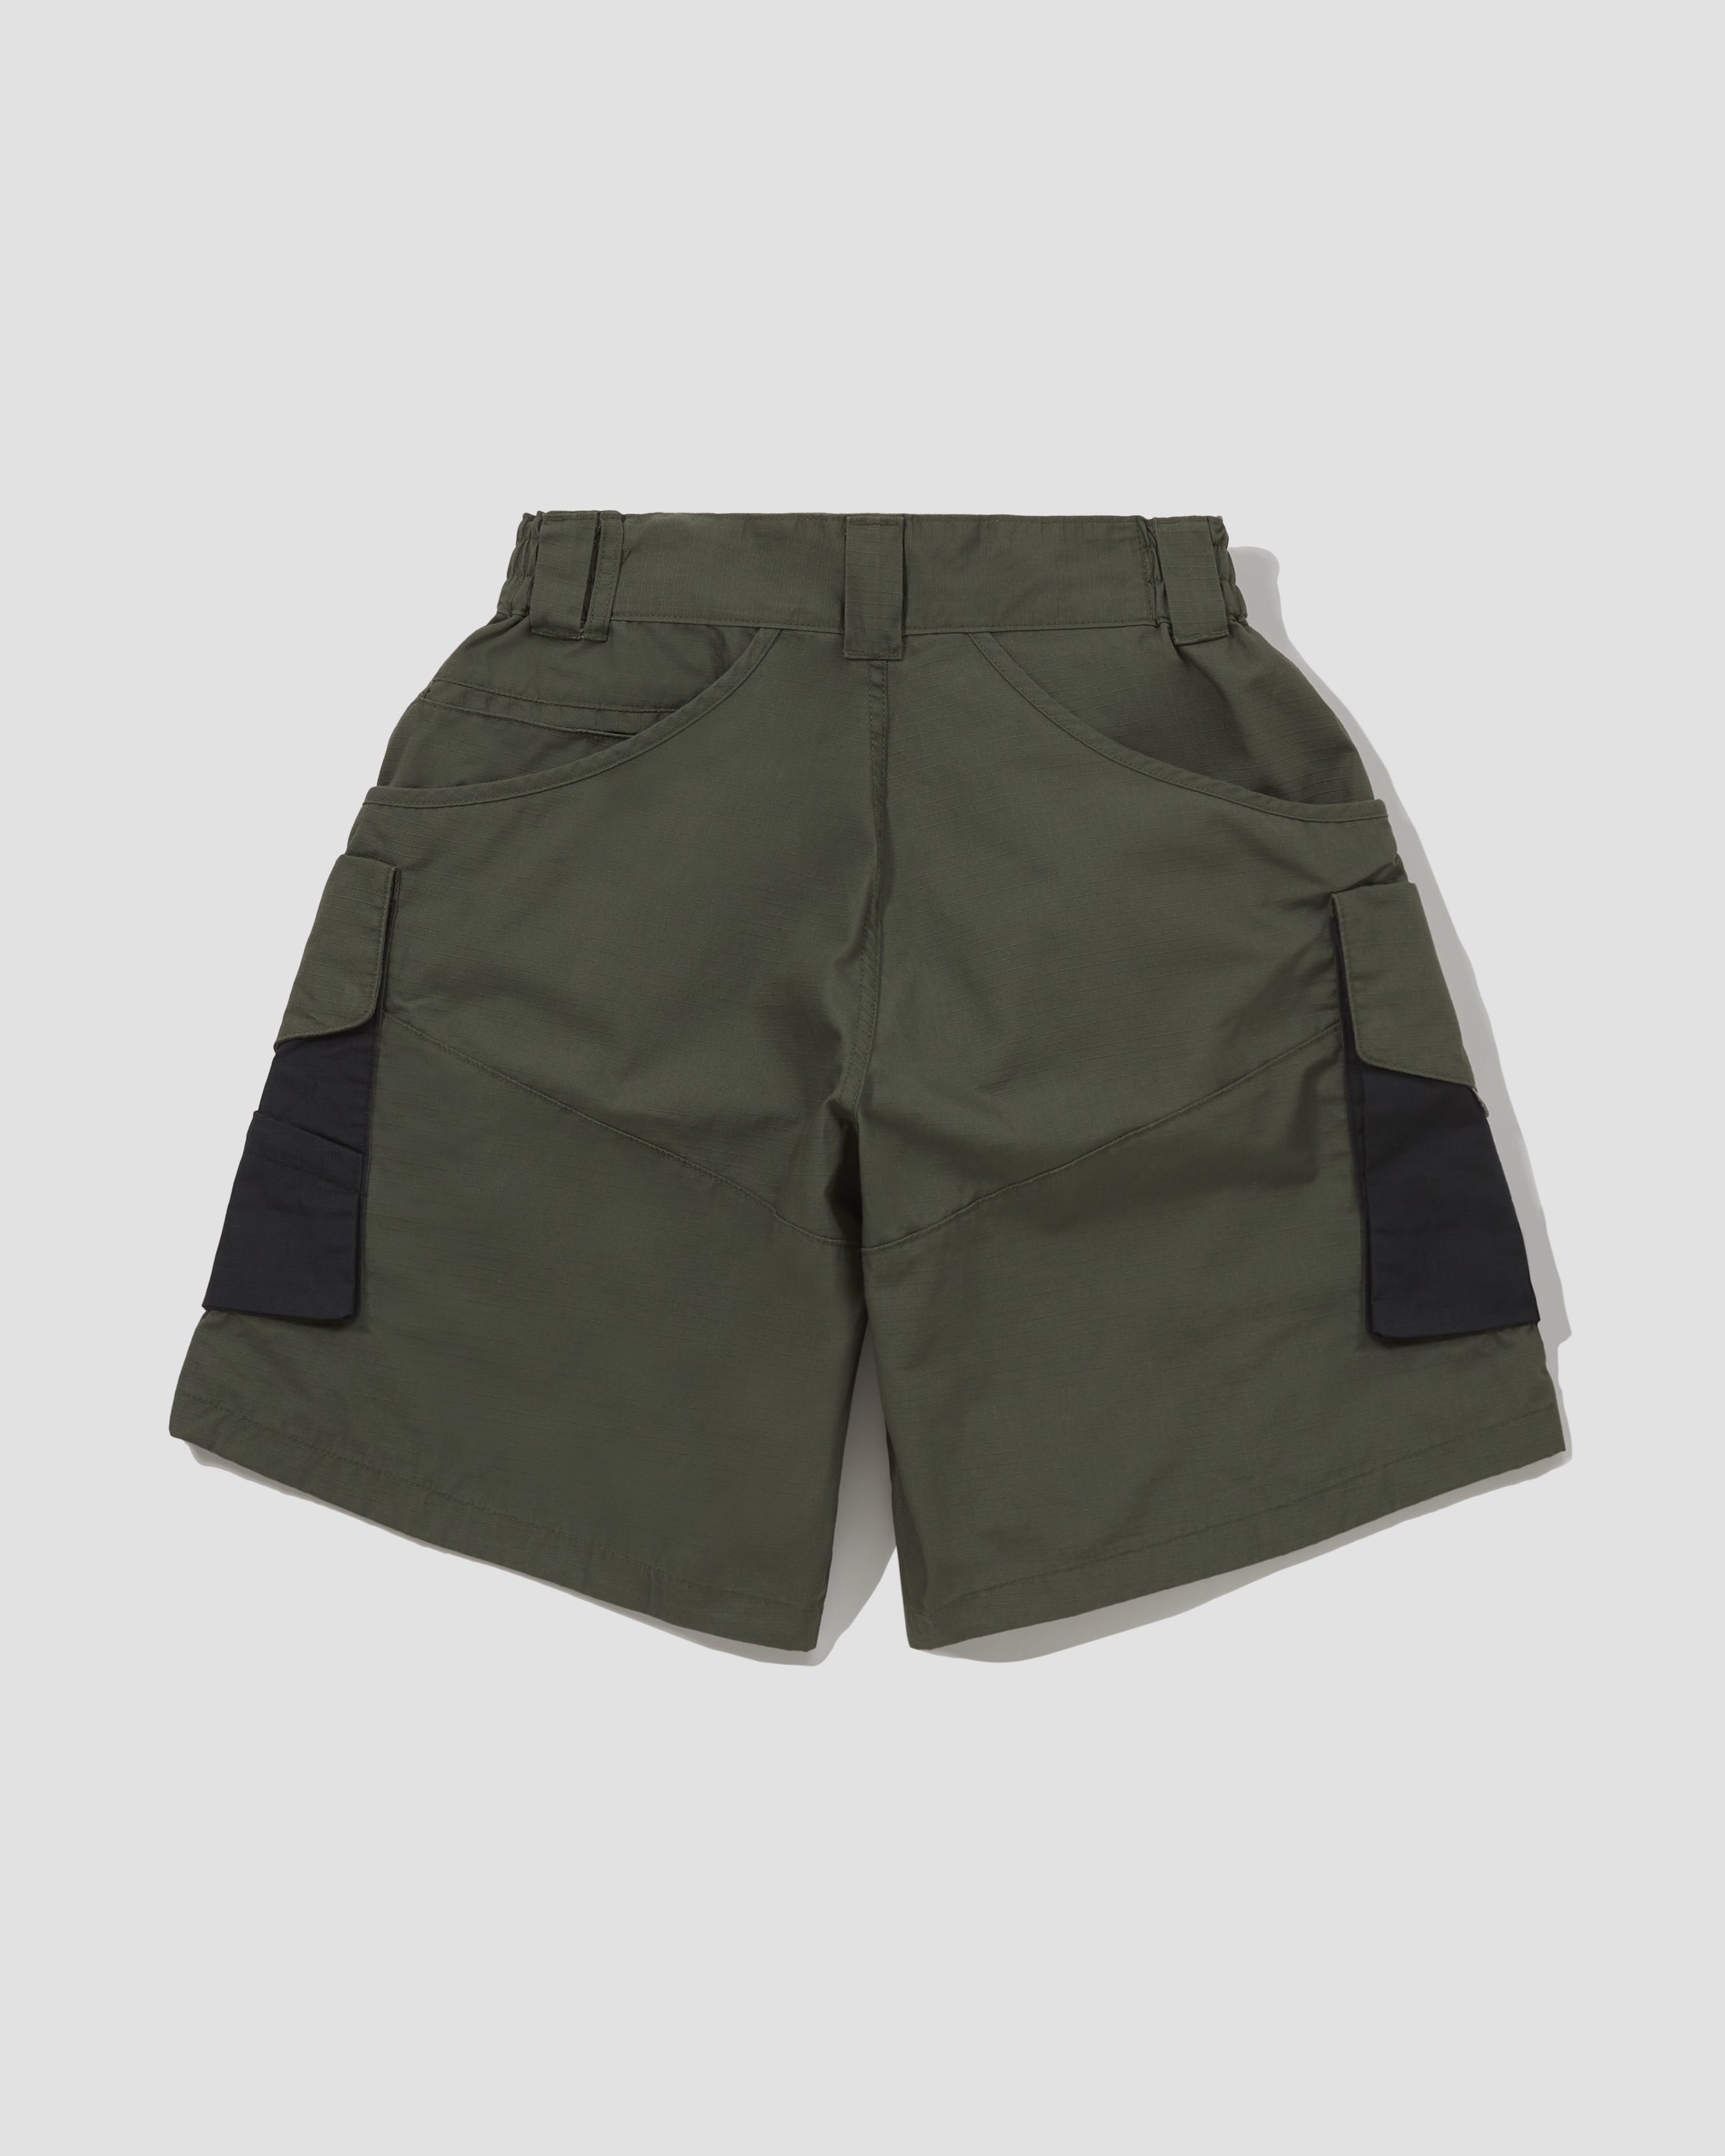 SS22 Slanted Pockets Cargo Shorts - Polyester Ripstop Olive / Black